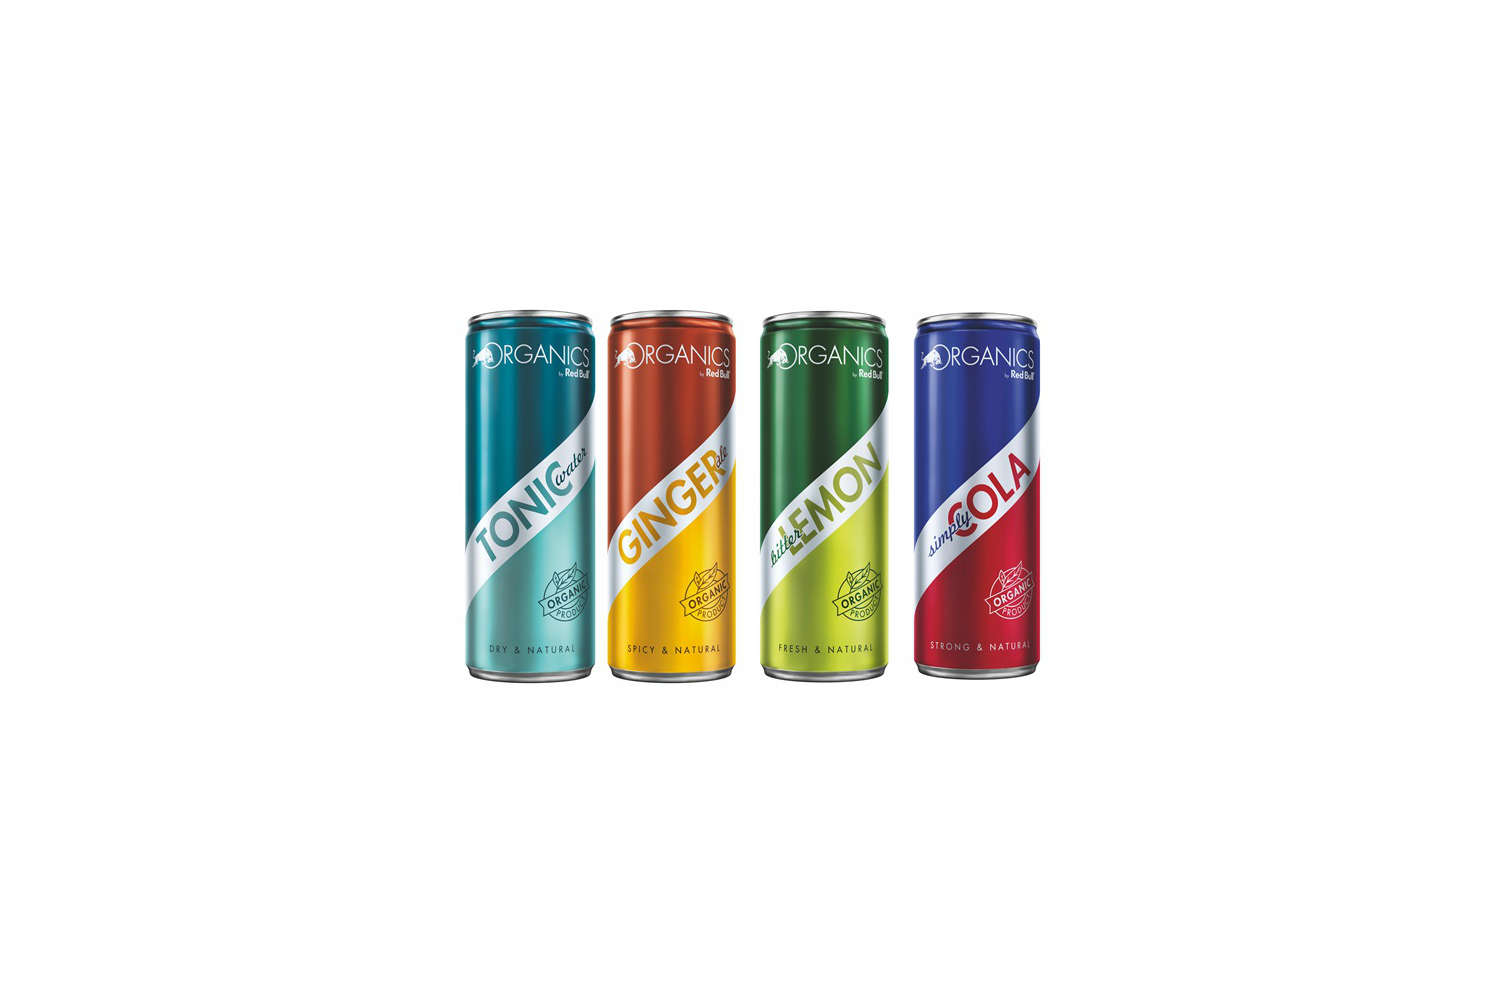 Red Bull launches Organics soft drink range